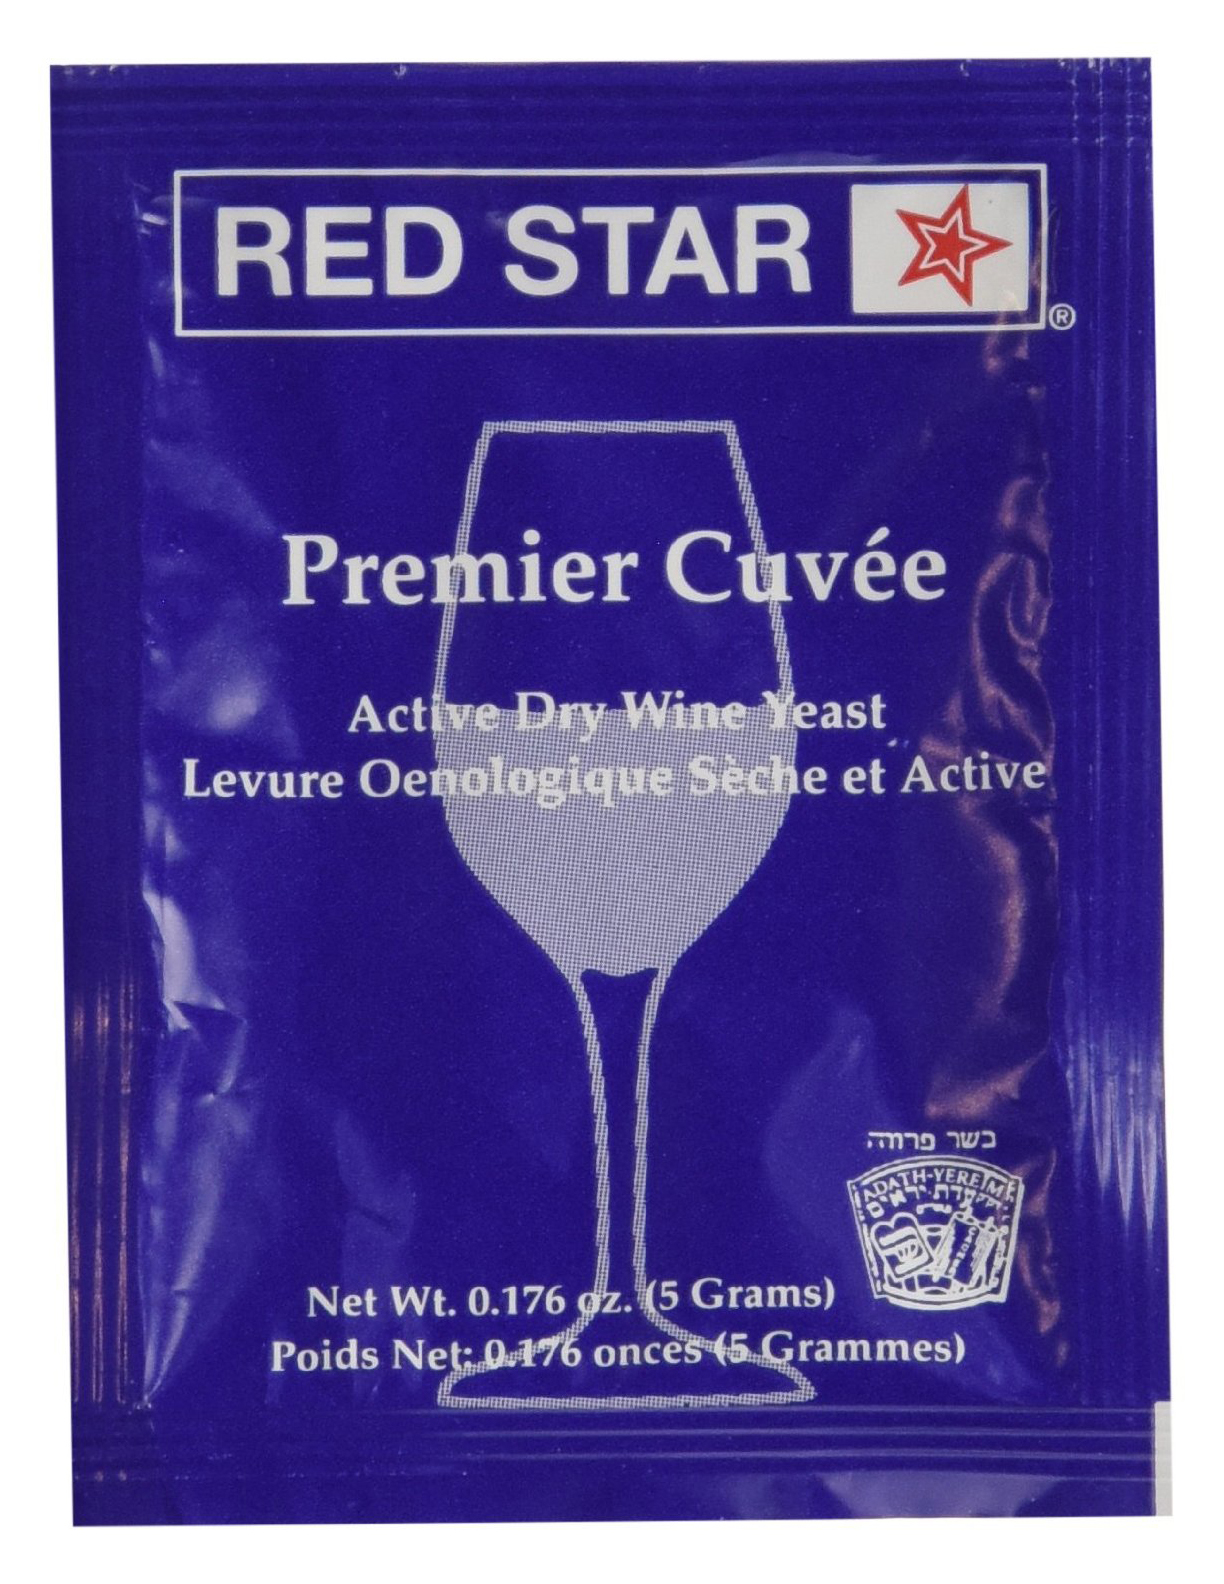 Red Star Premier Cuvee - 1 Packet